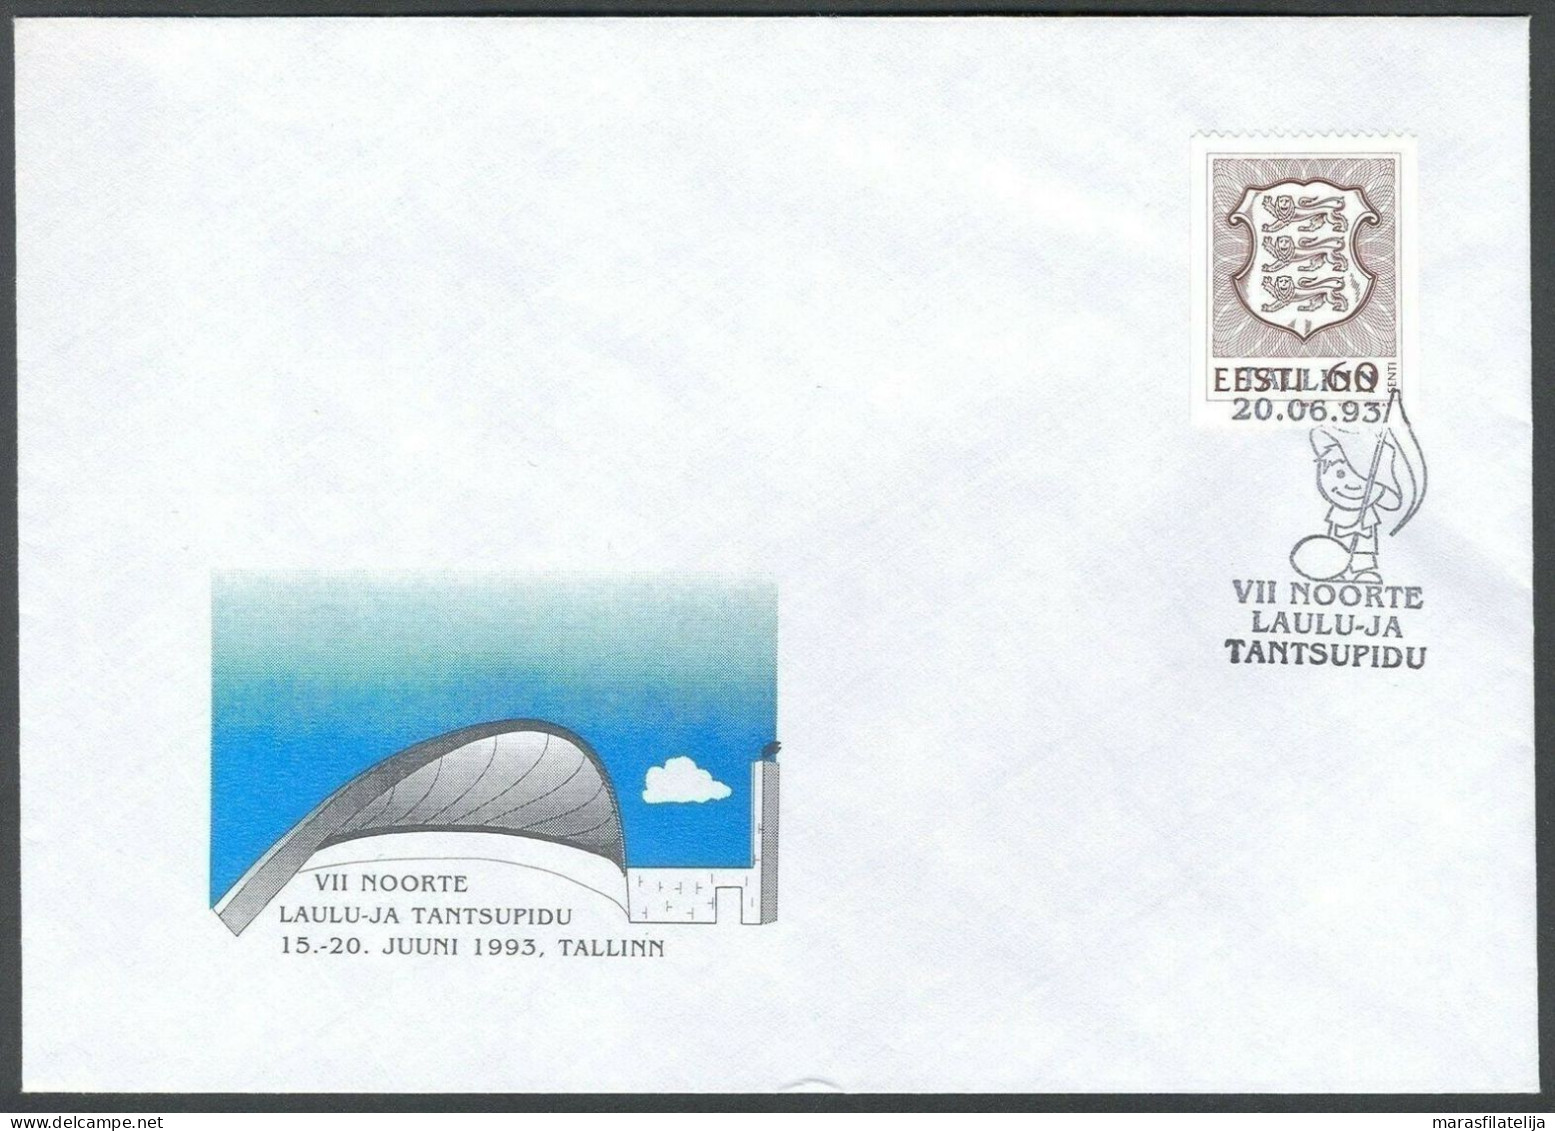 Estonia 1993, Music Festival, Special Postmark & Cover - Estonia